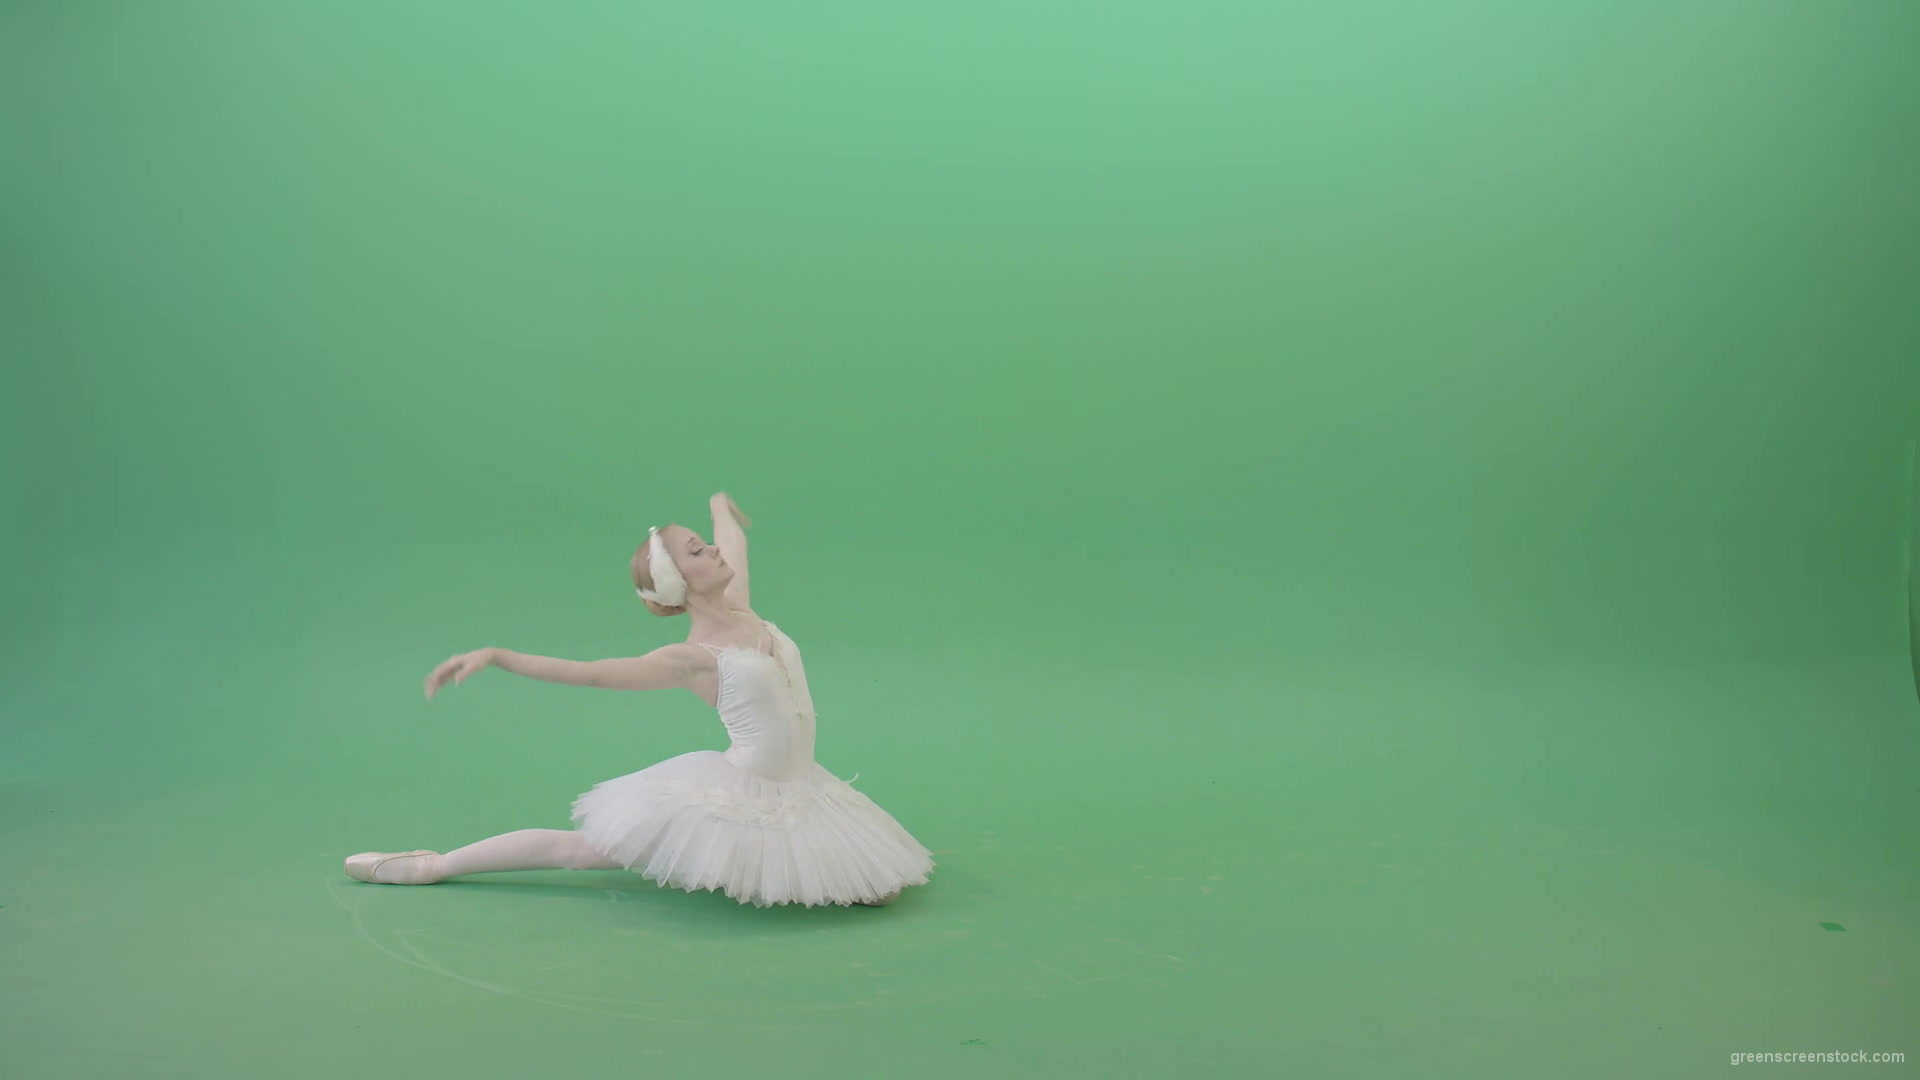 Flying-swan-laken-ballerina-dancing-with-light-on-green-screen-chroma-key-4K-Video-Footage-1920_009 Green Screen Stock